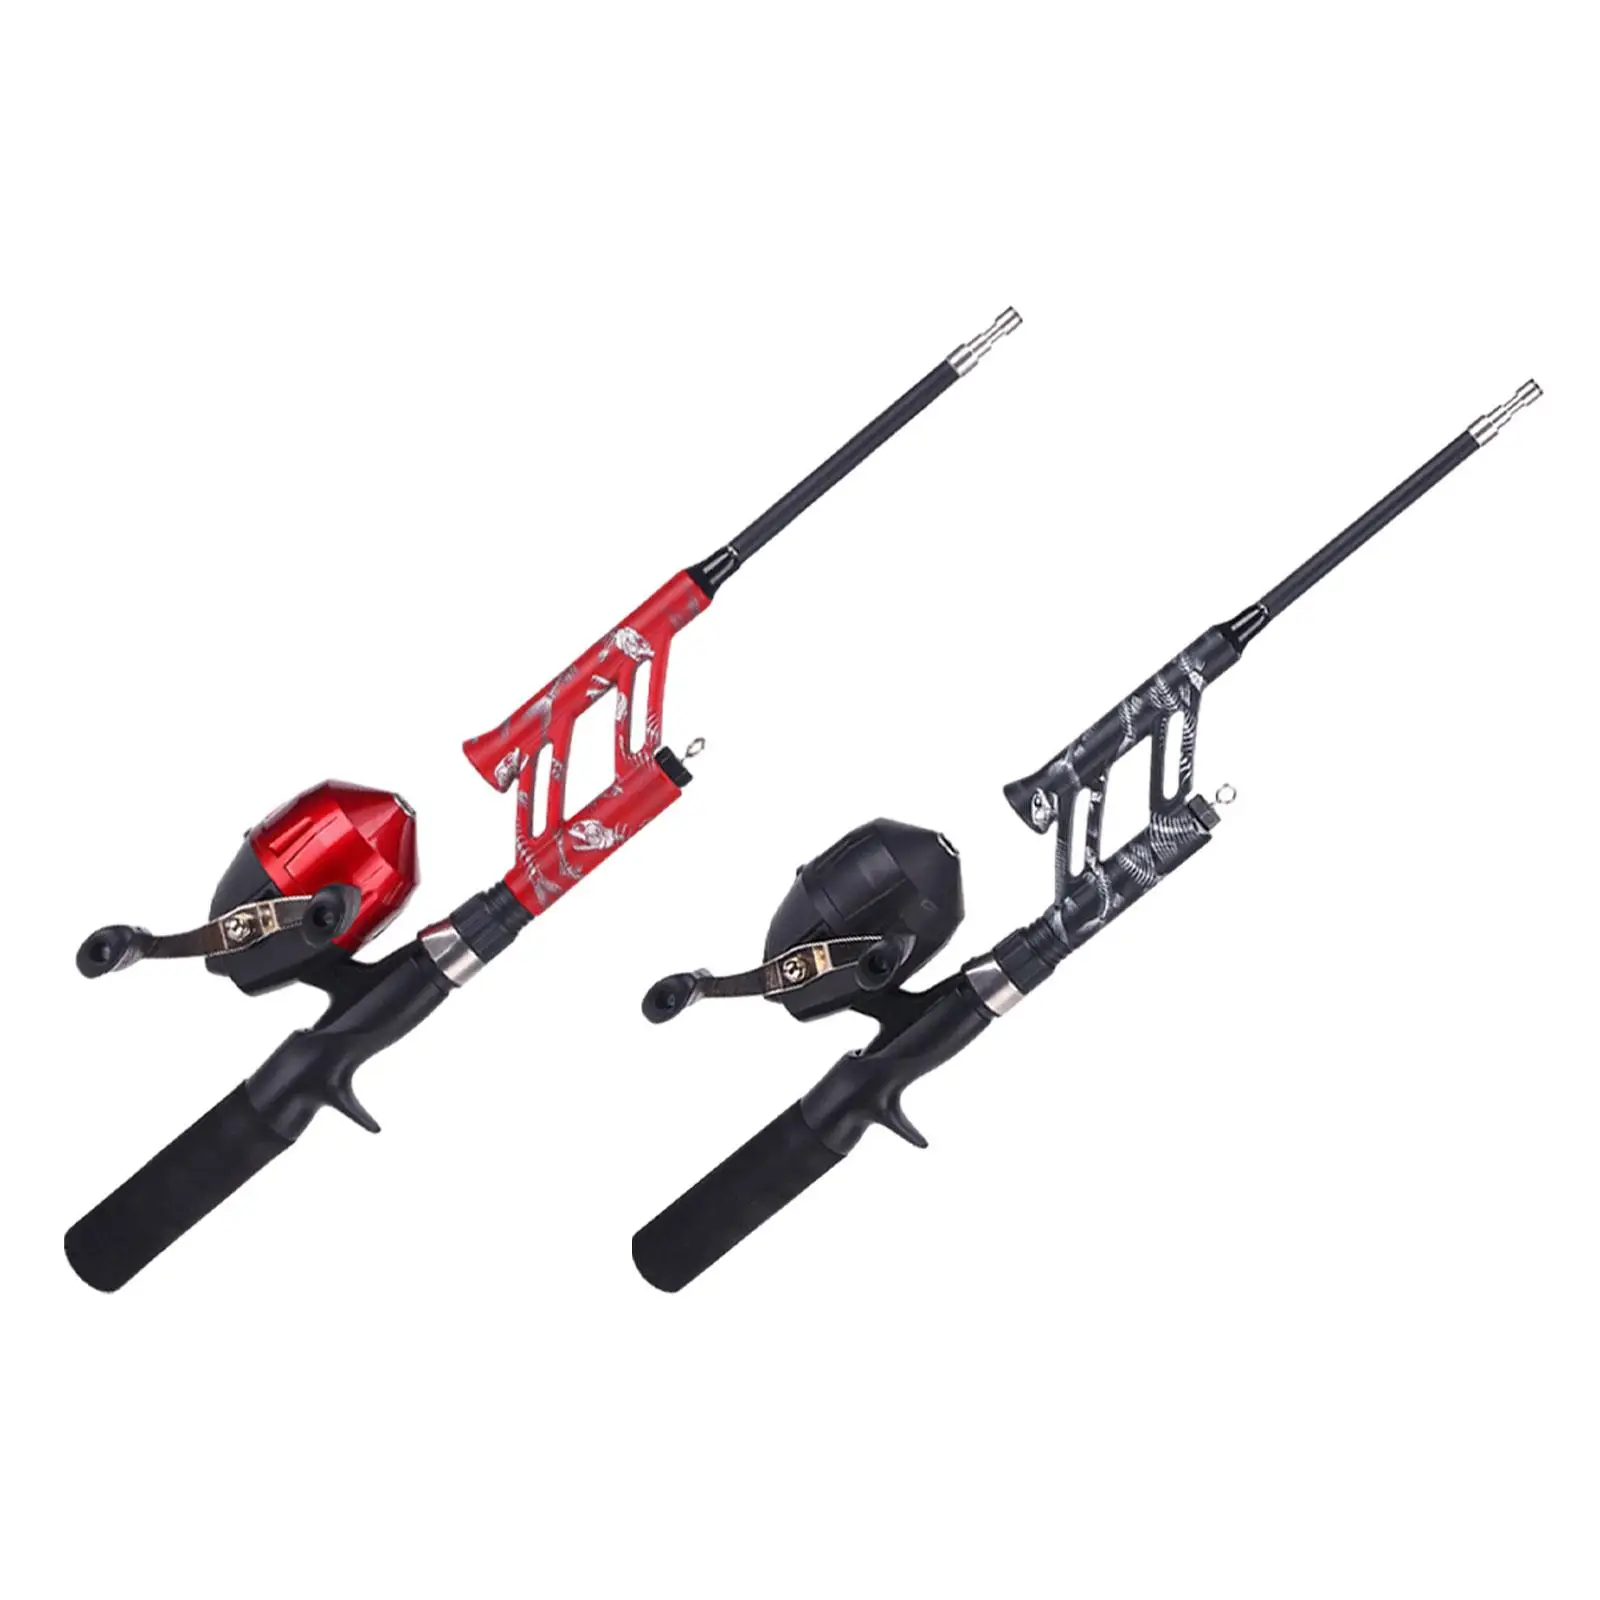 Fishing Rod and Reel Ultralight Portable Fishing Rods Set Comfortable Handle